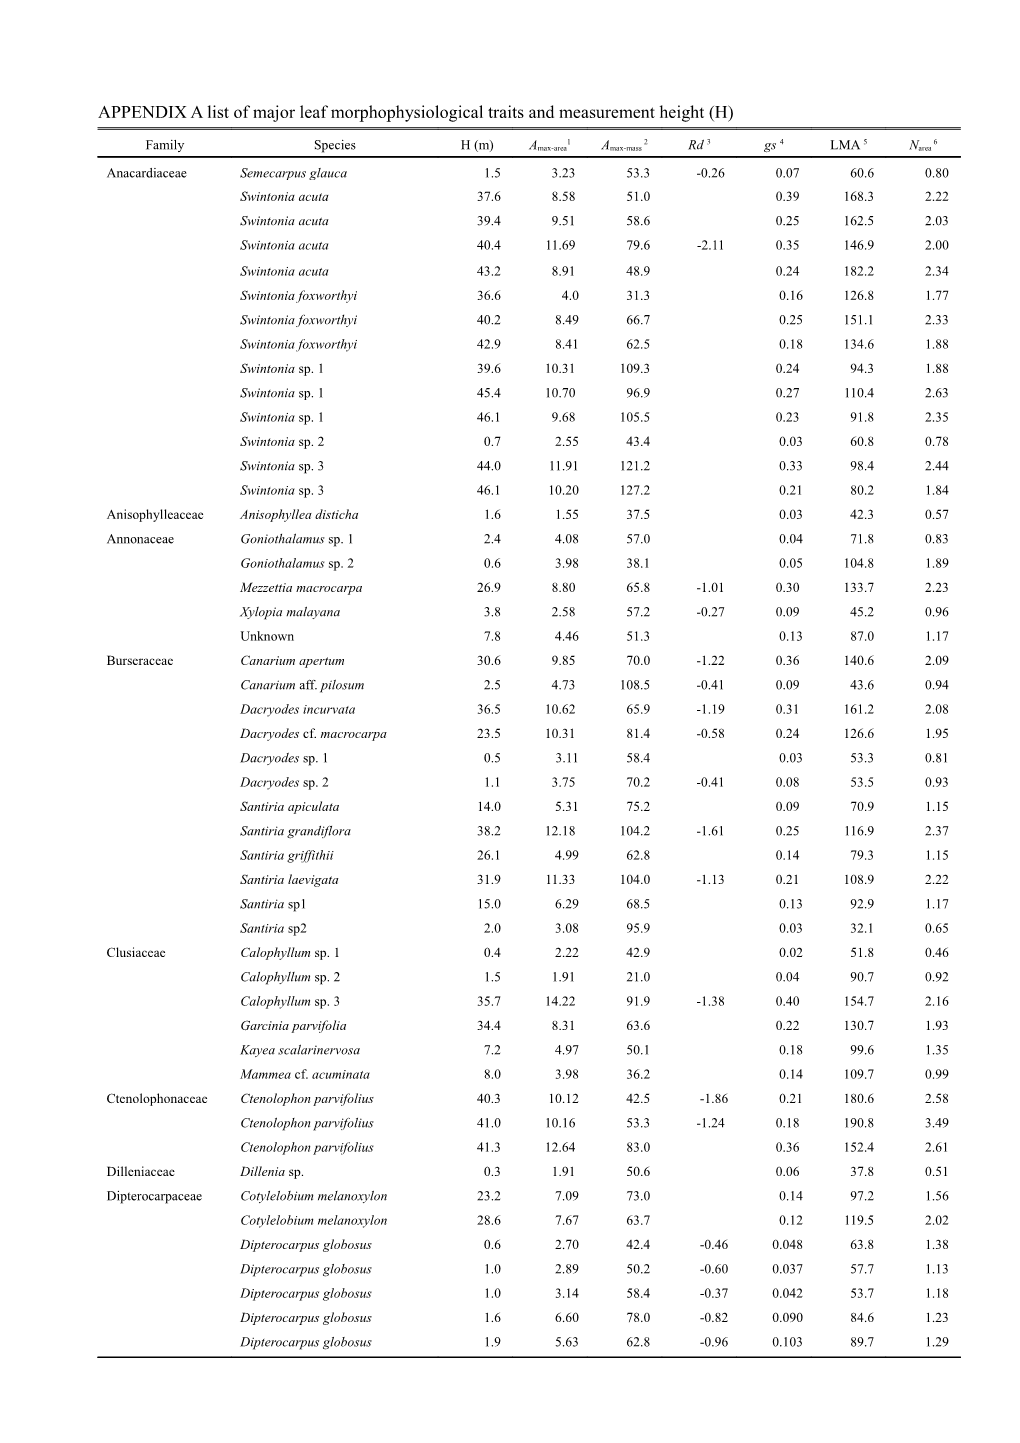 APPENDIX a List of Major Leaf Morphophysiological Traits and Measurement Height (H)